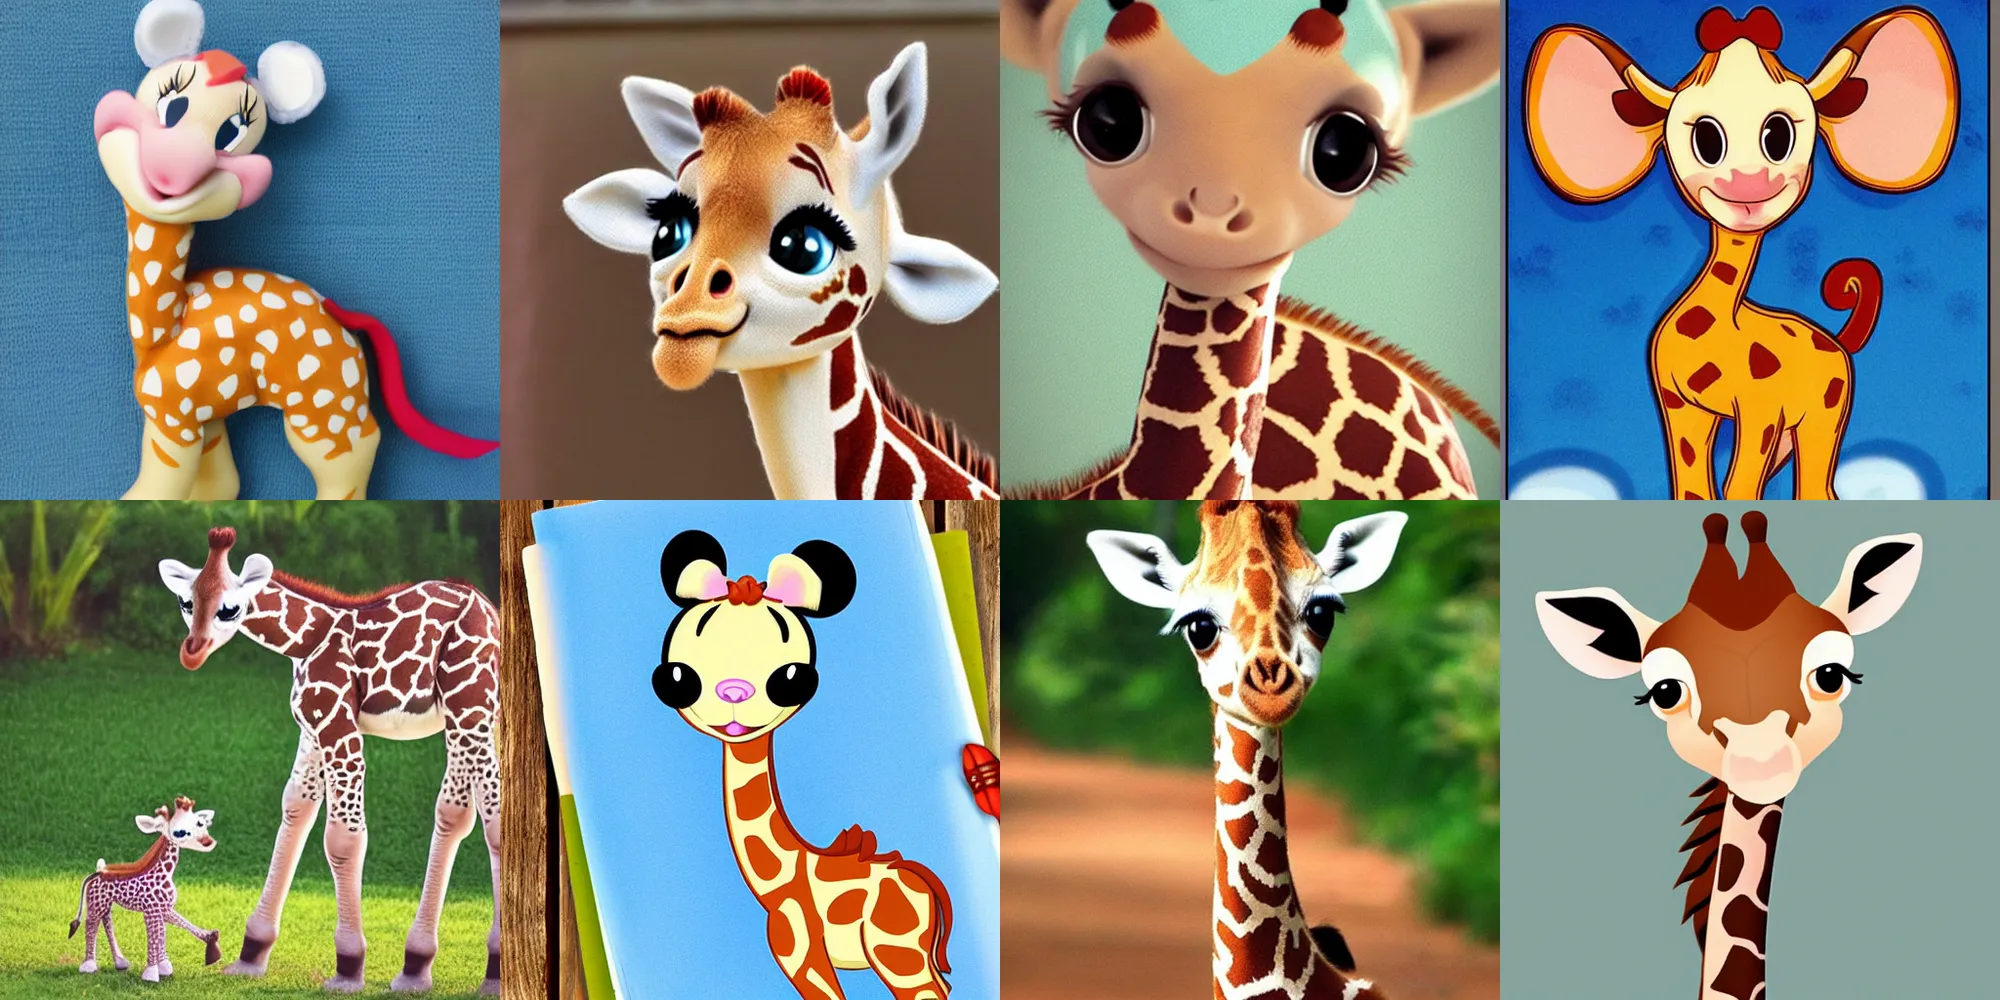 Prompt: Disney style baby giraffe cute